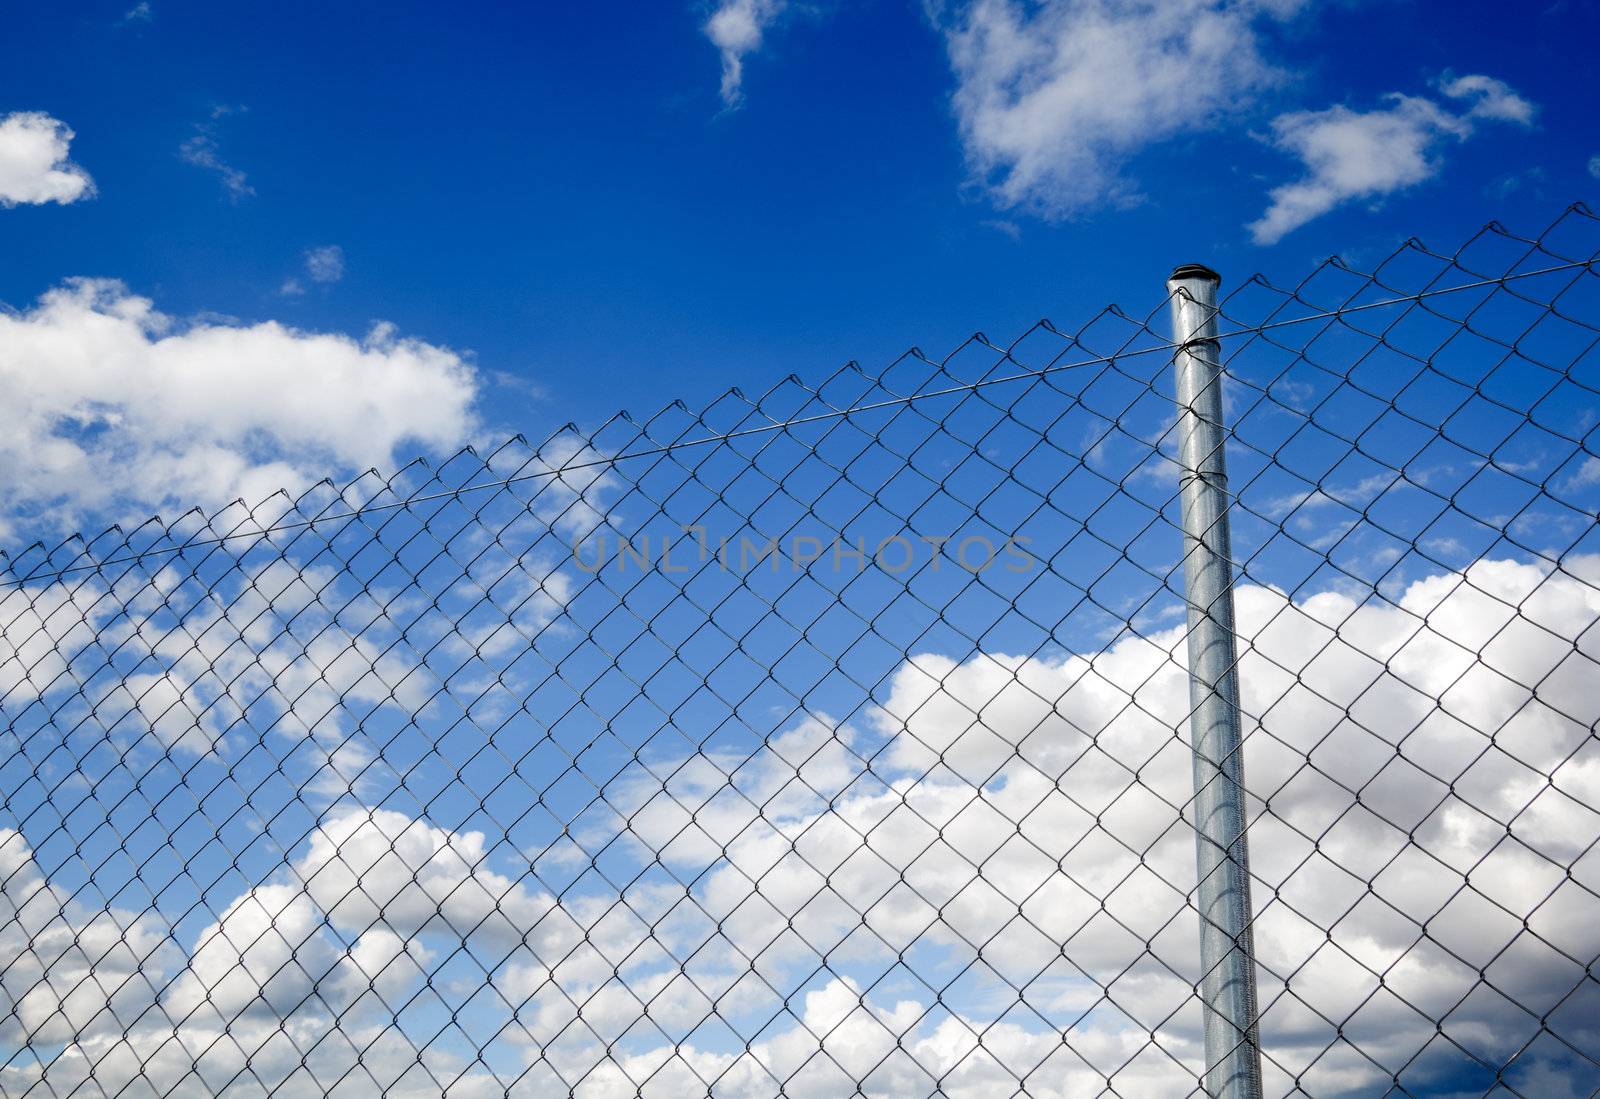 Fence and sky by carloscastilla